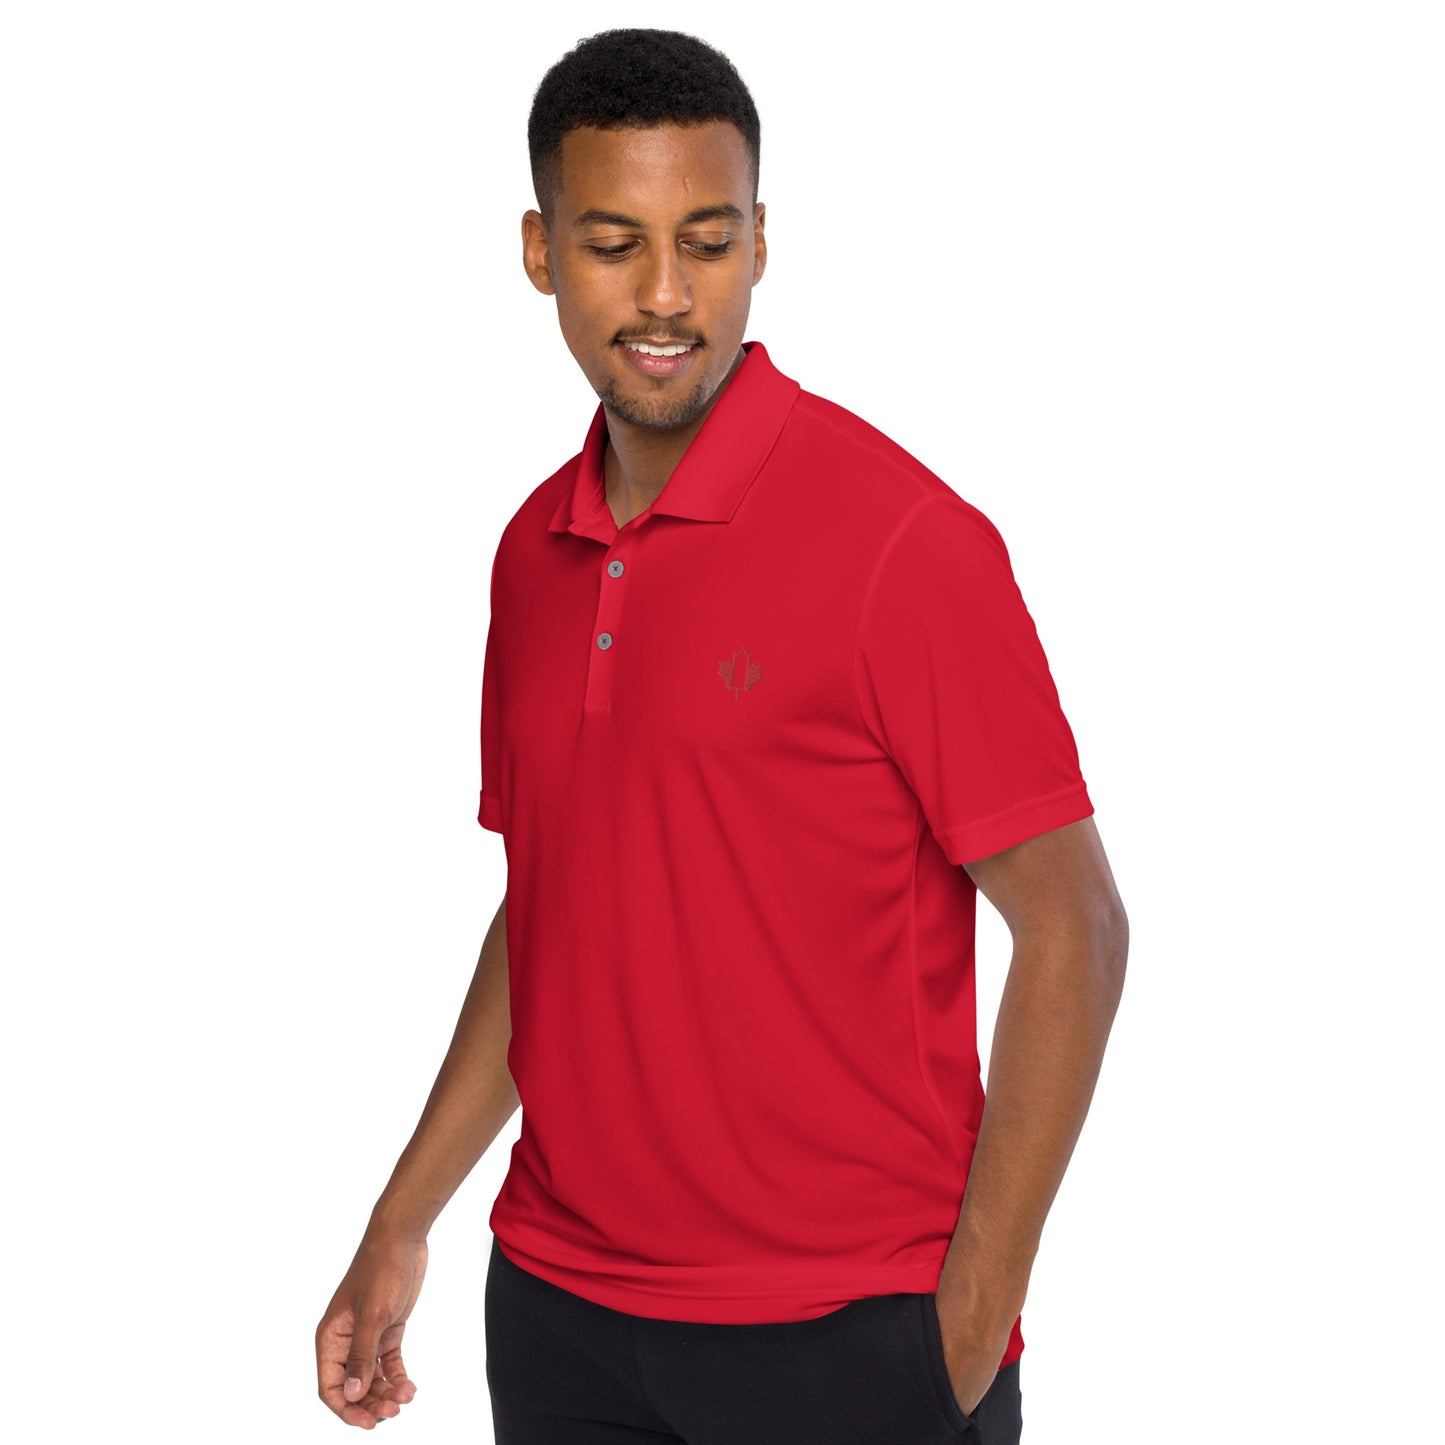 adidas performance polo shirt with Canada logo design